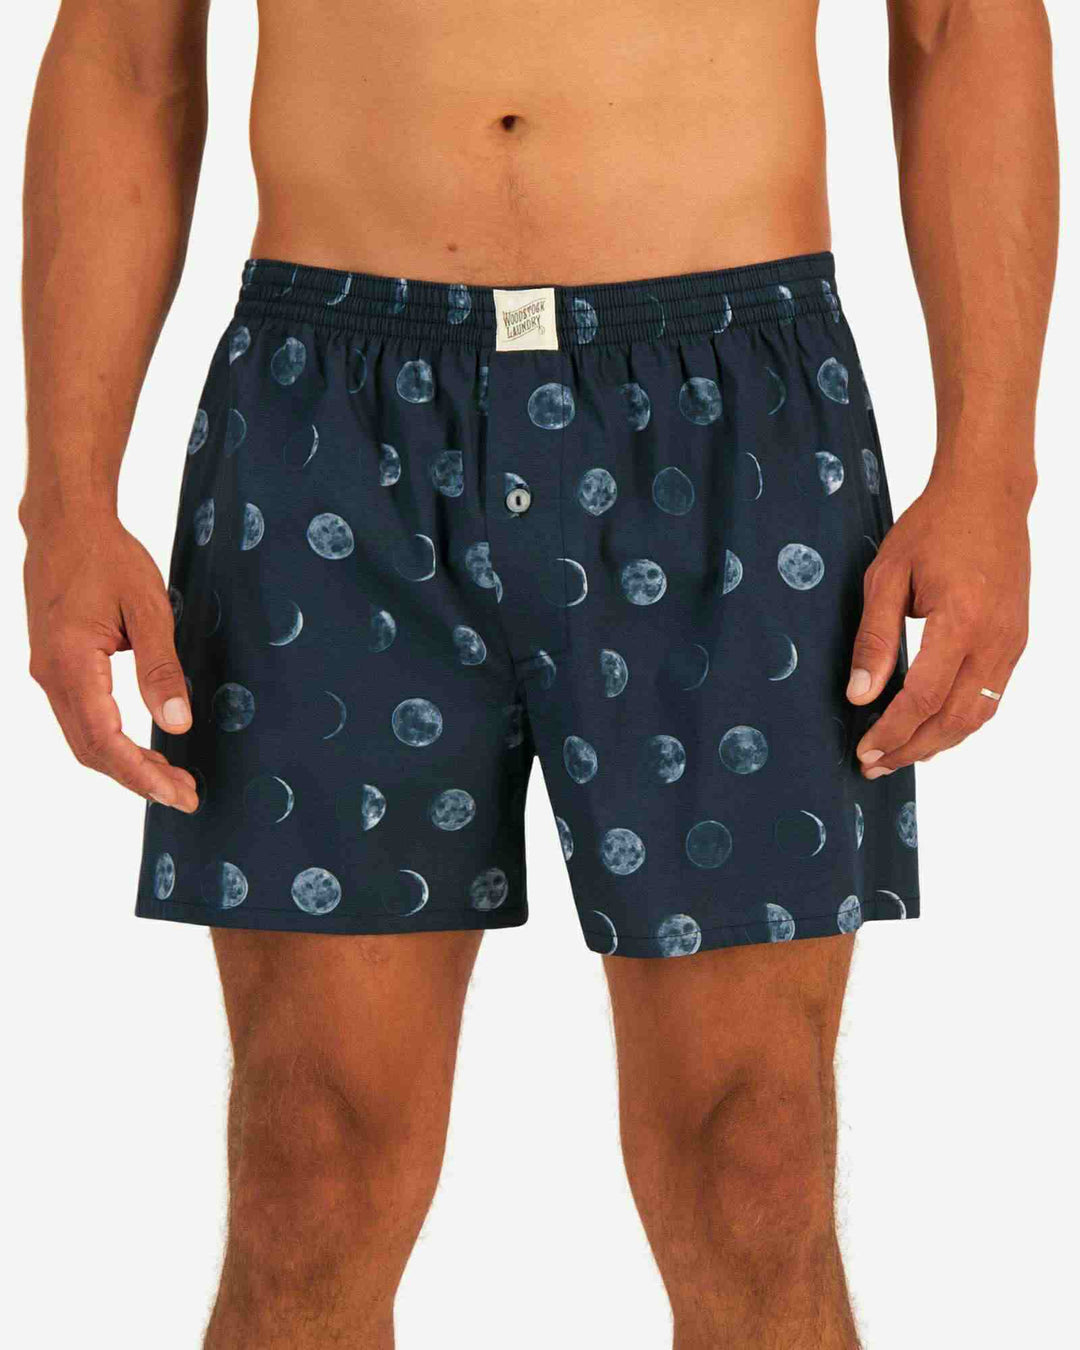 Mens boxer shorts - Blue moons